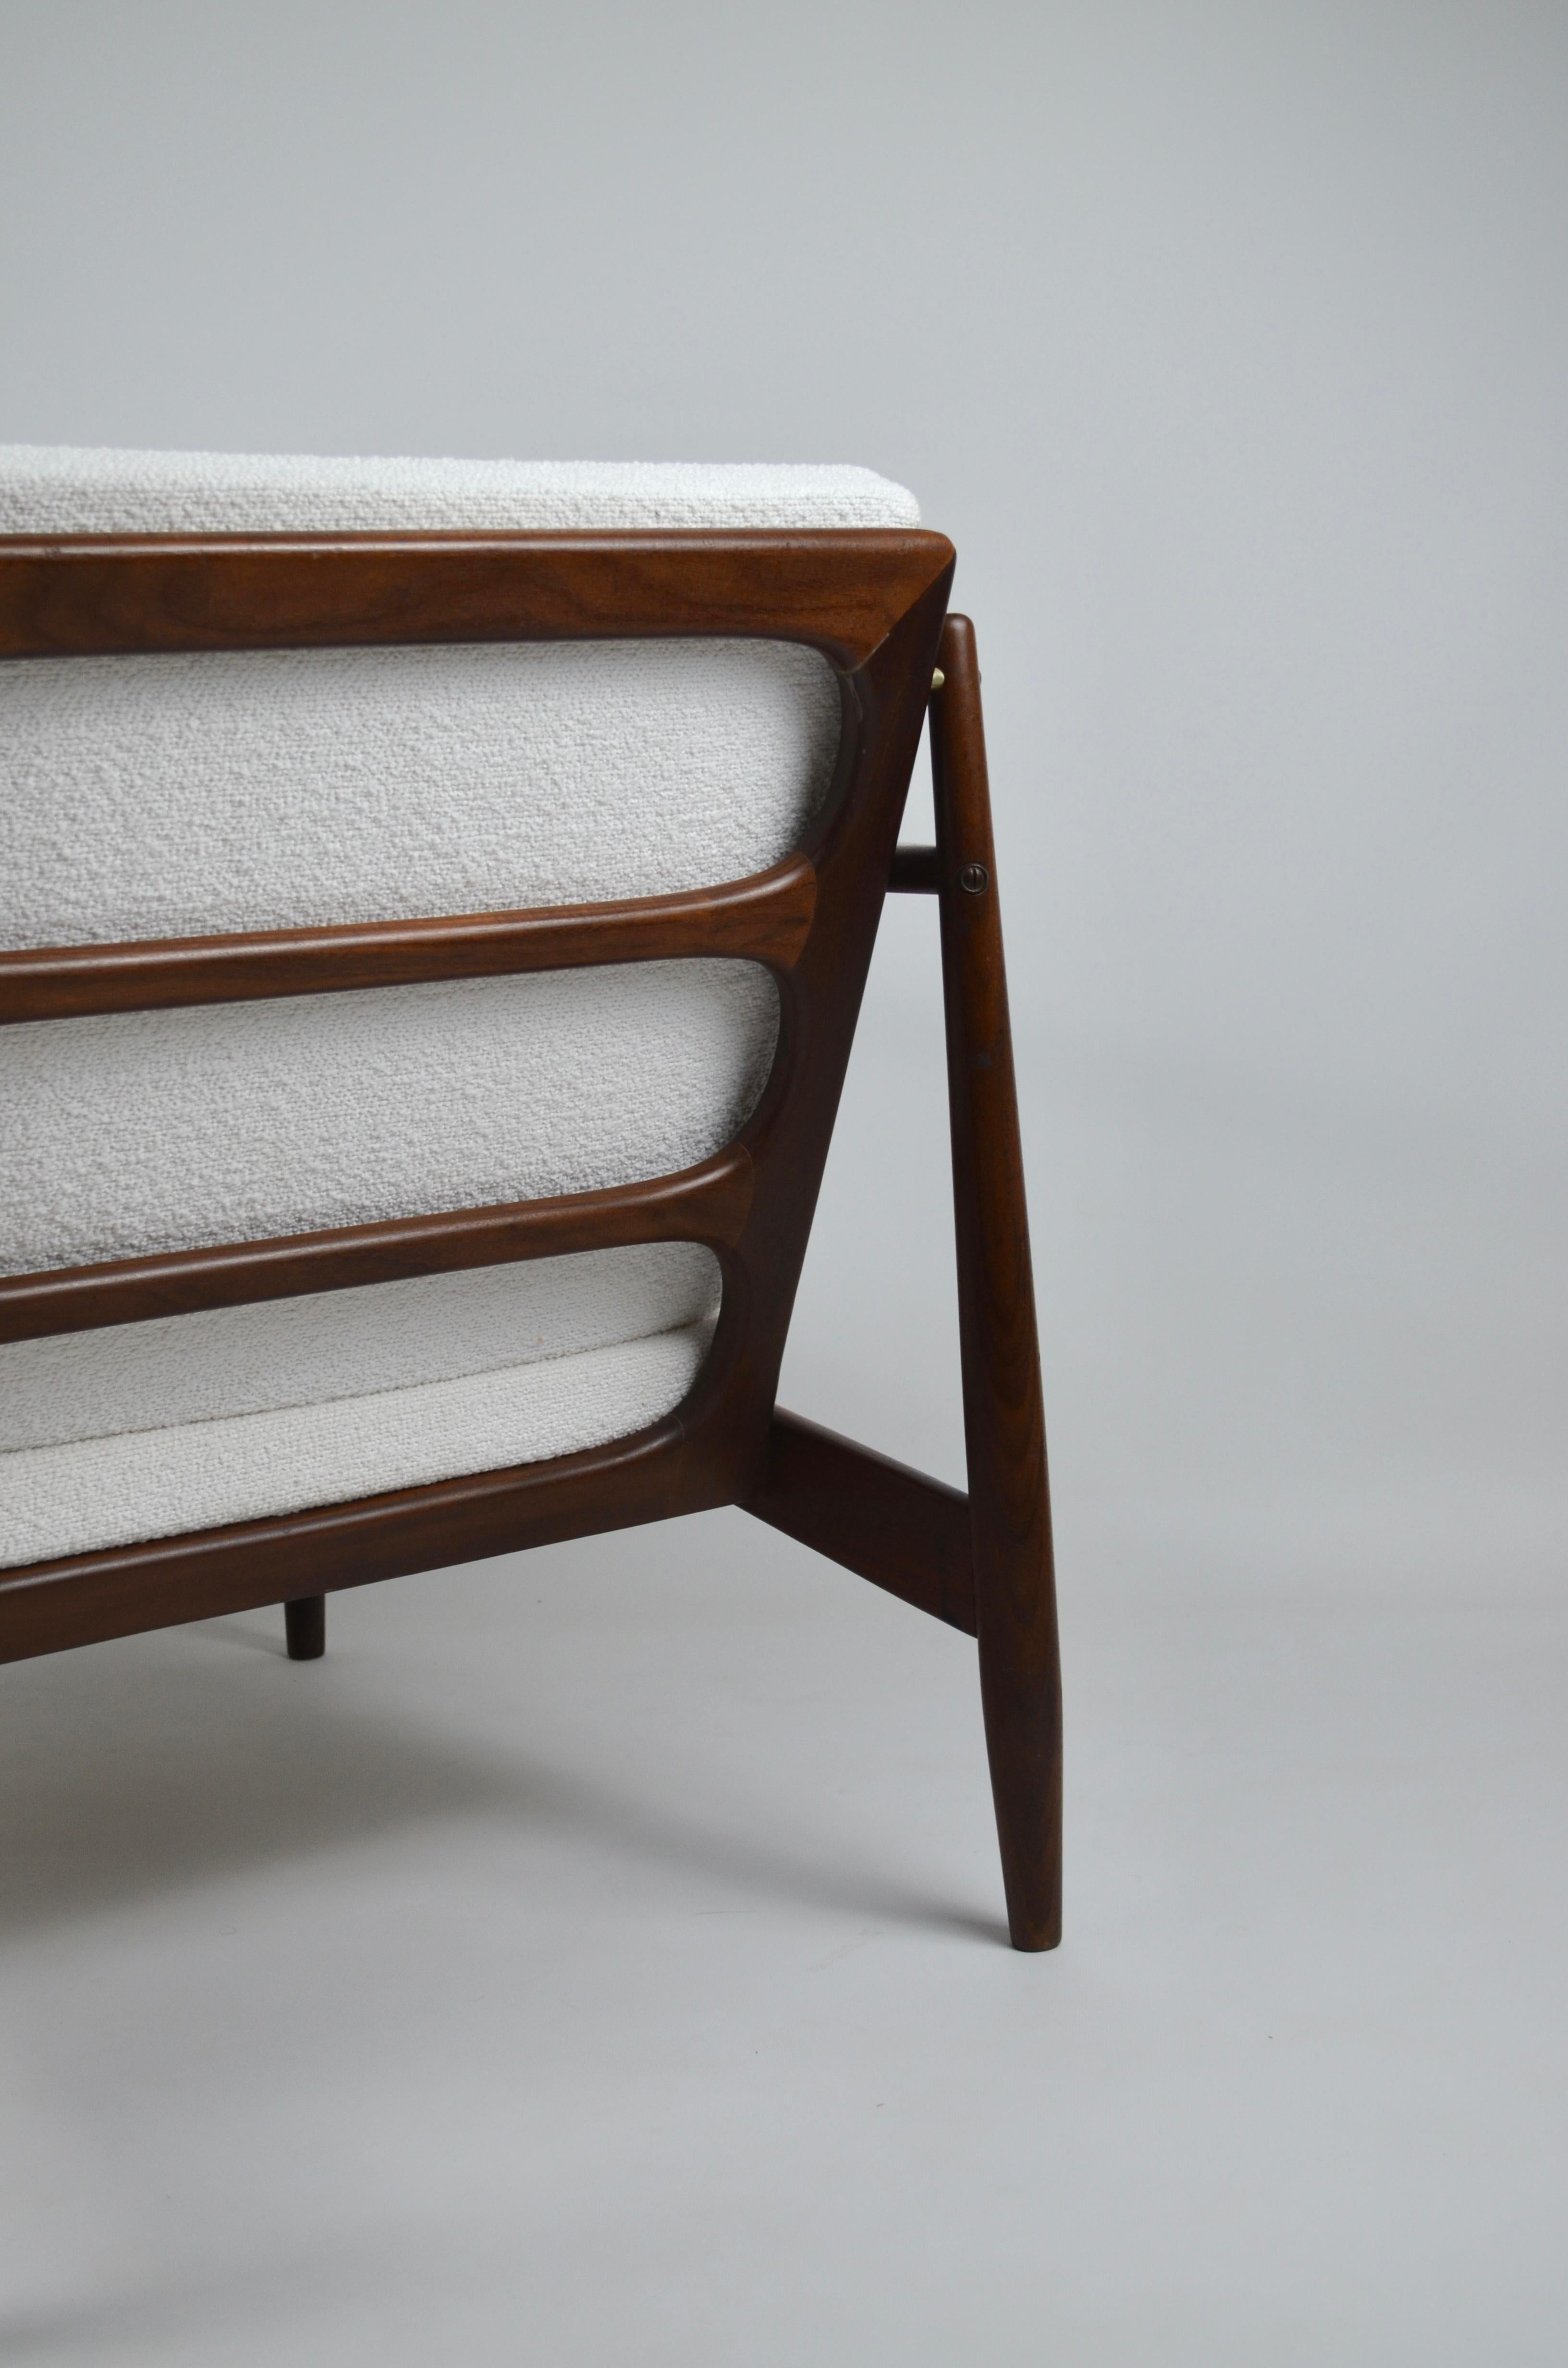 Mid-20th Century Teak armchair by Grete Jalk, Denmark, 60's For Sale